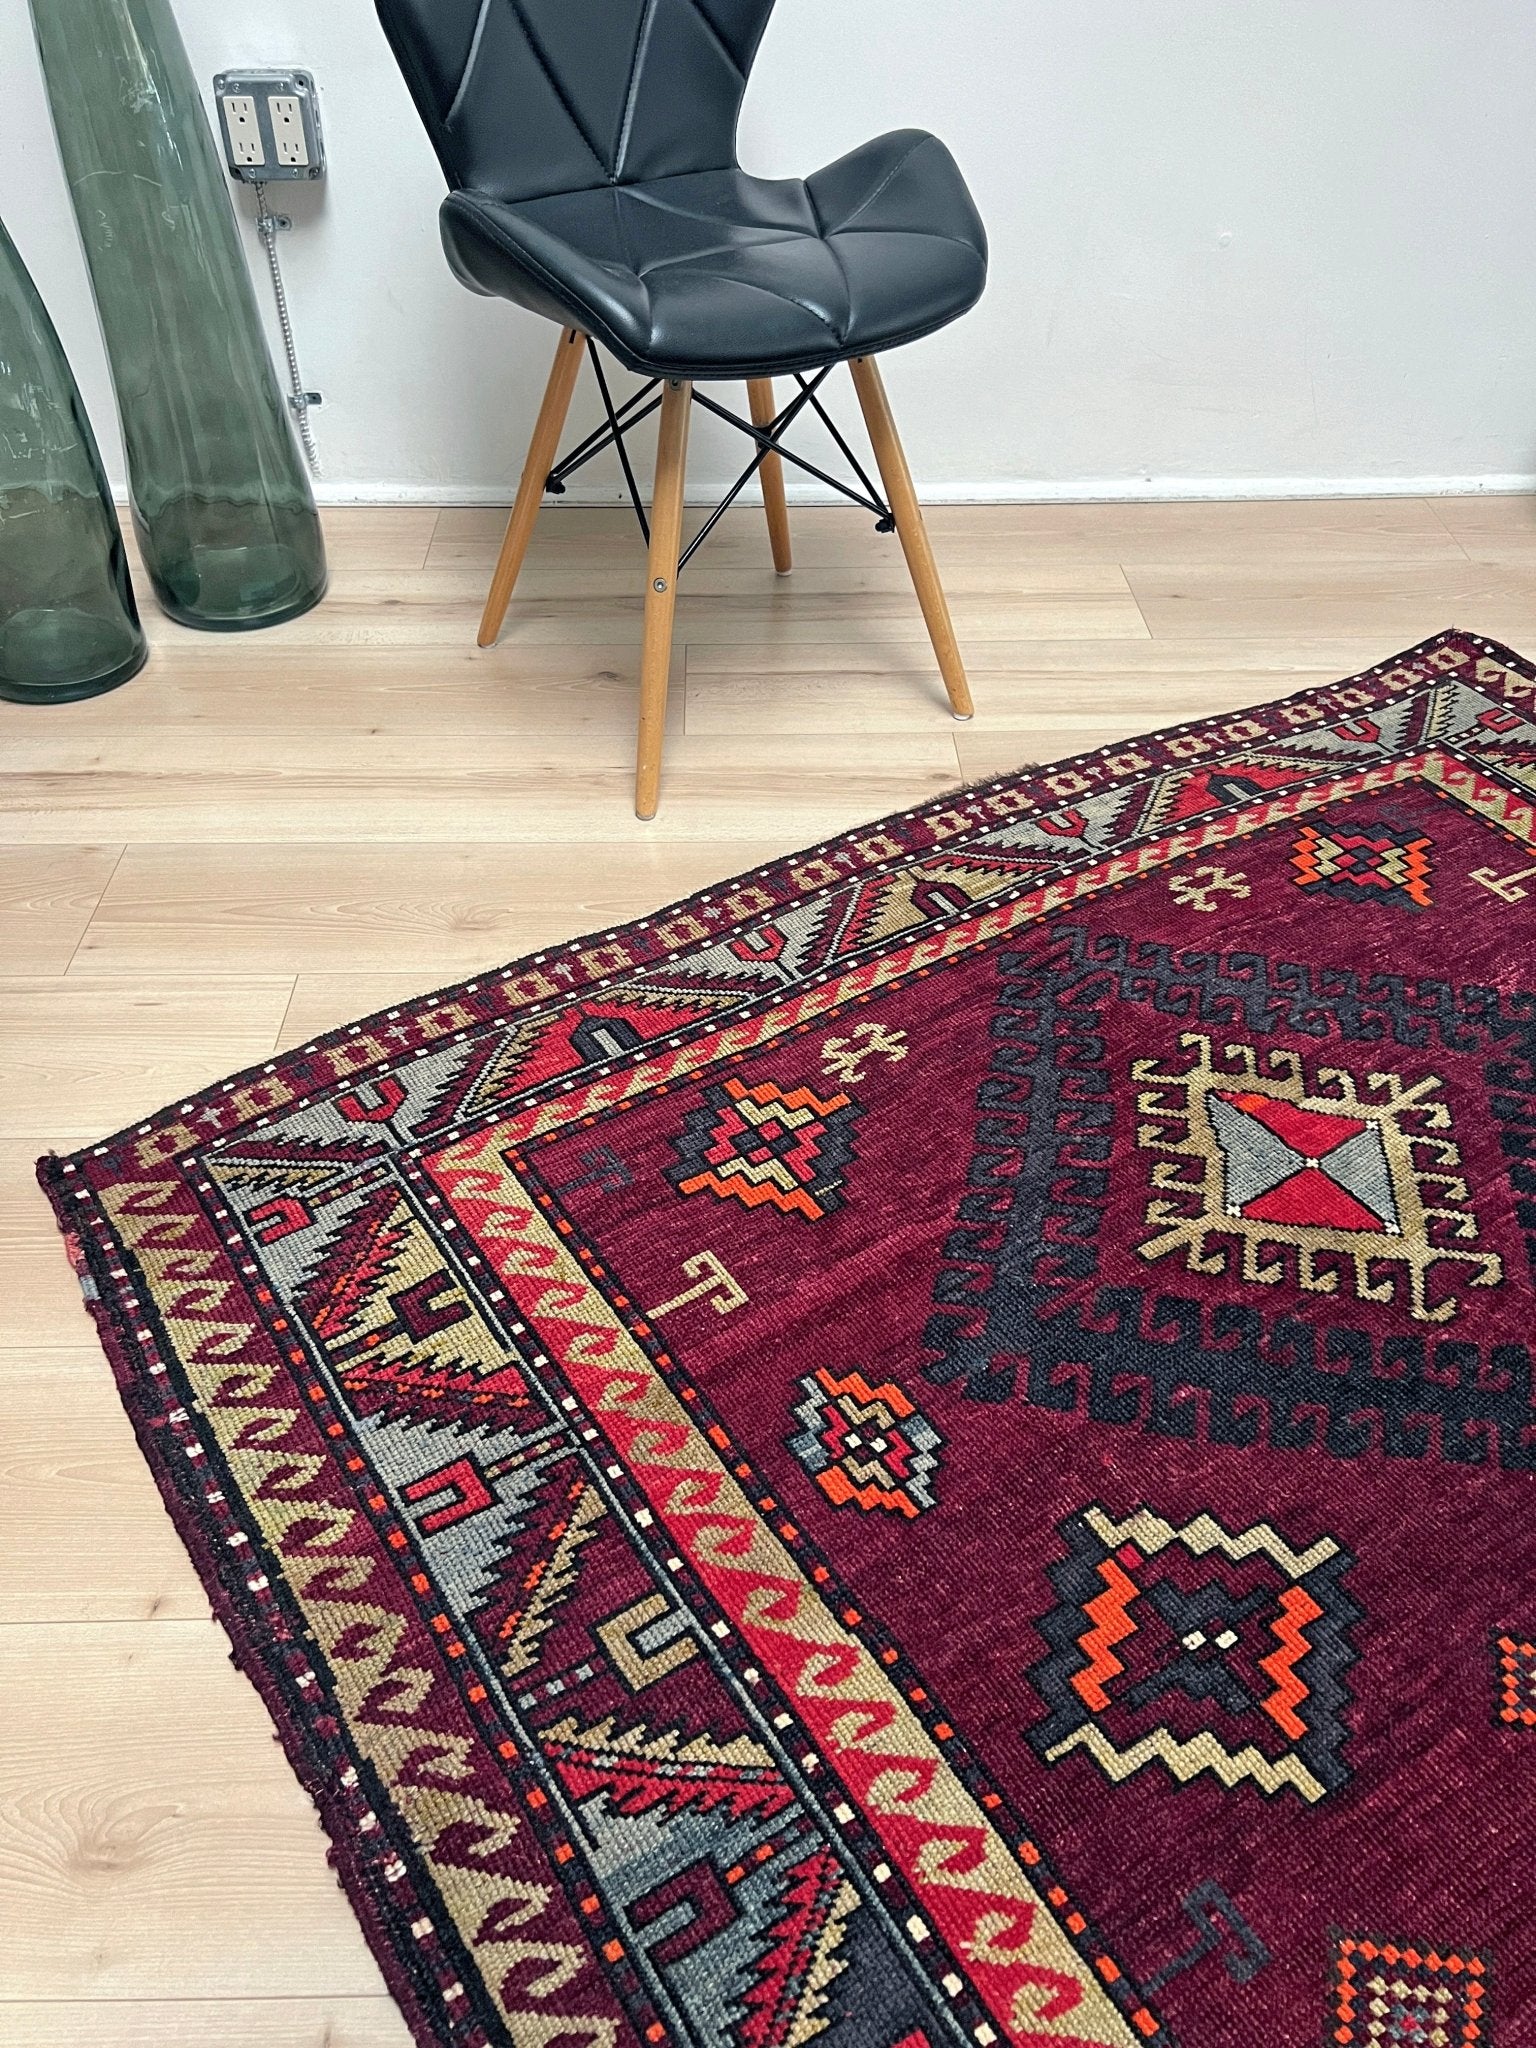 kazak caucasian vintage rug shop San francisco bay area. Rug store berkeley, palo alto. Buy handmade wool rug online